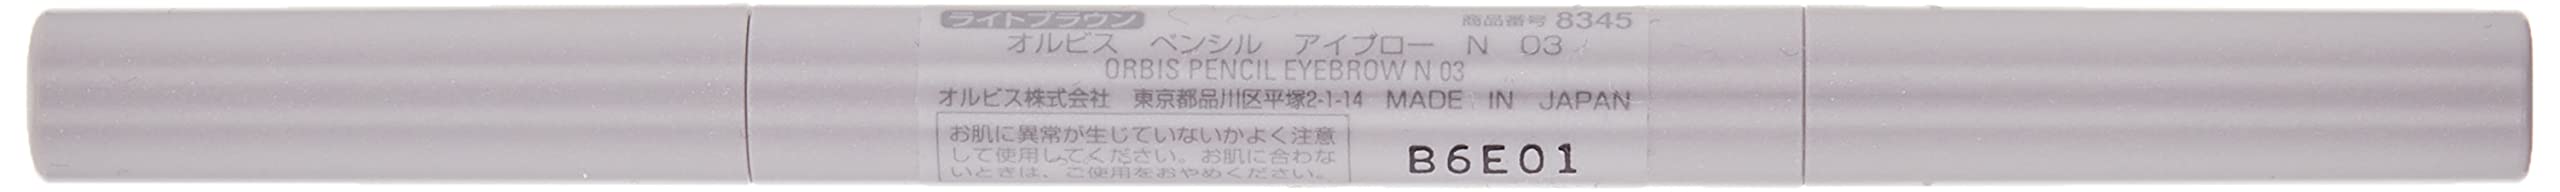 Orbis N 03 Pencil Eyebrow - Authentic Orbis Eye Makeup Product